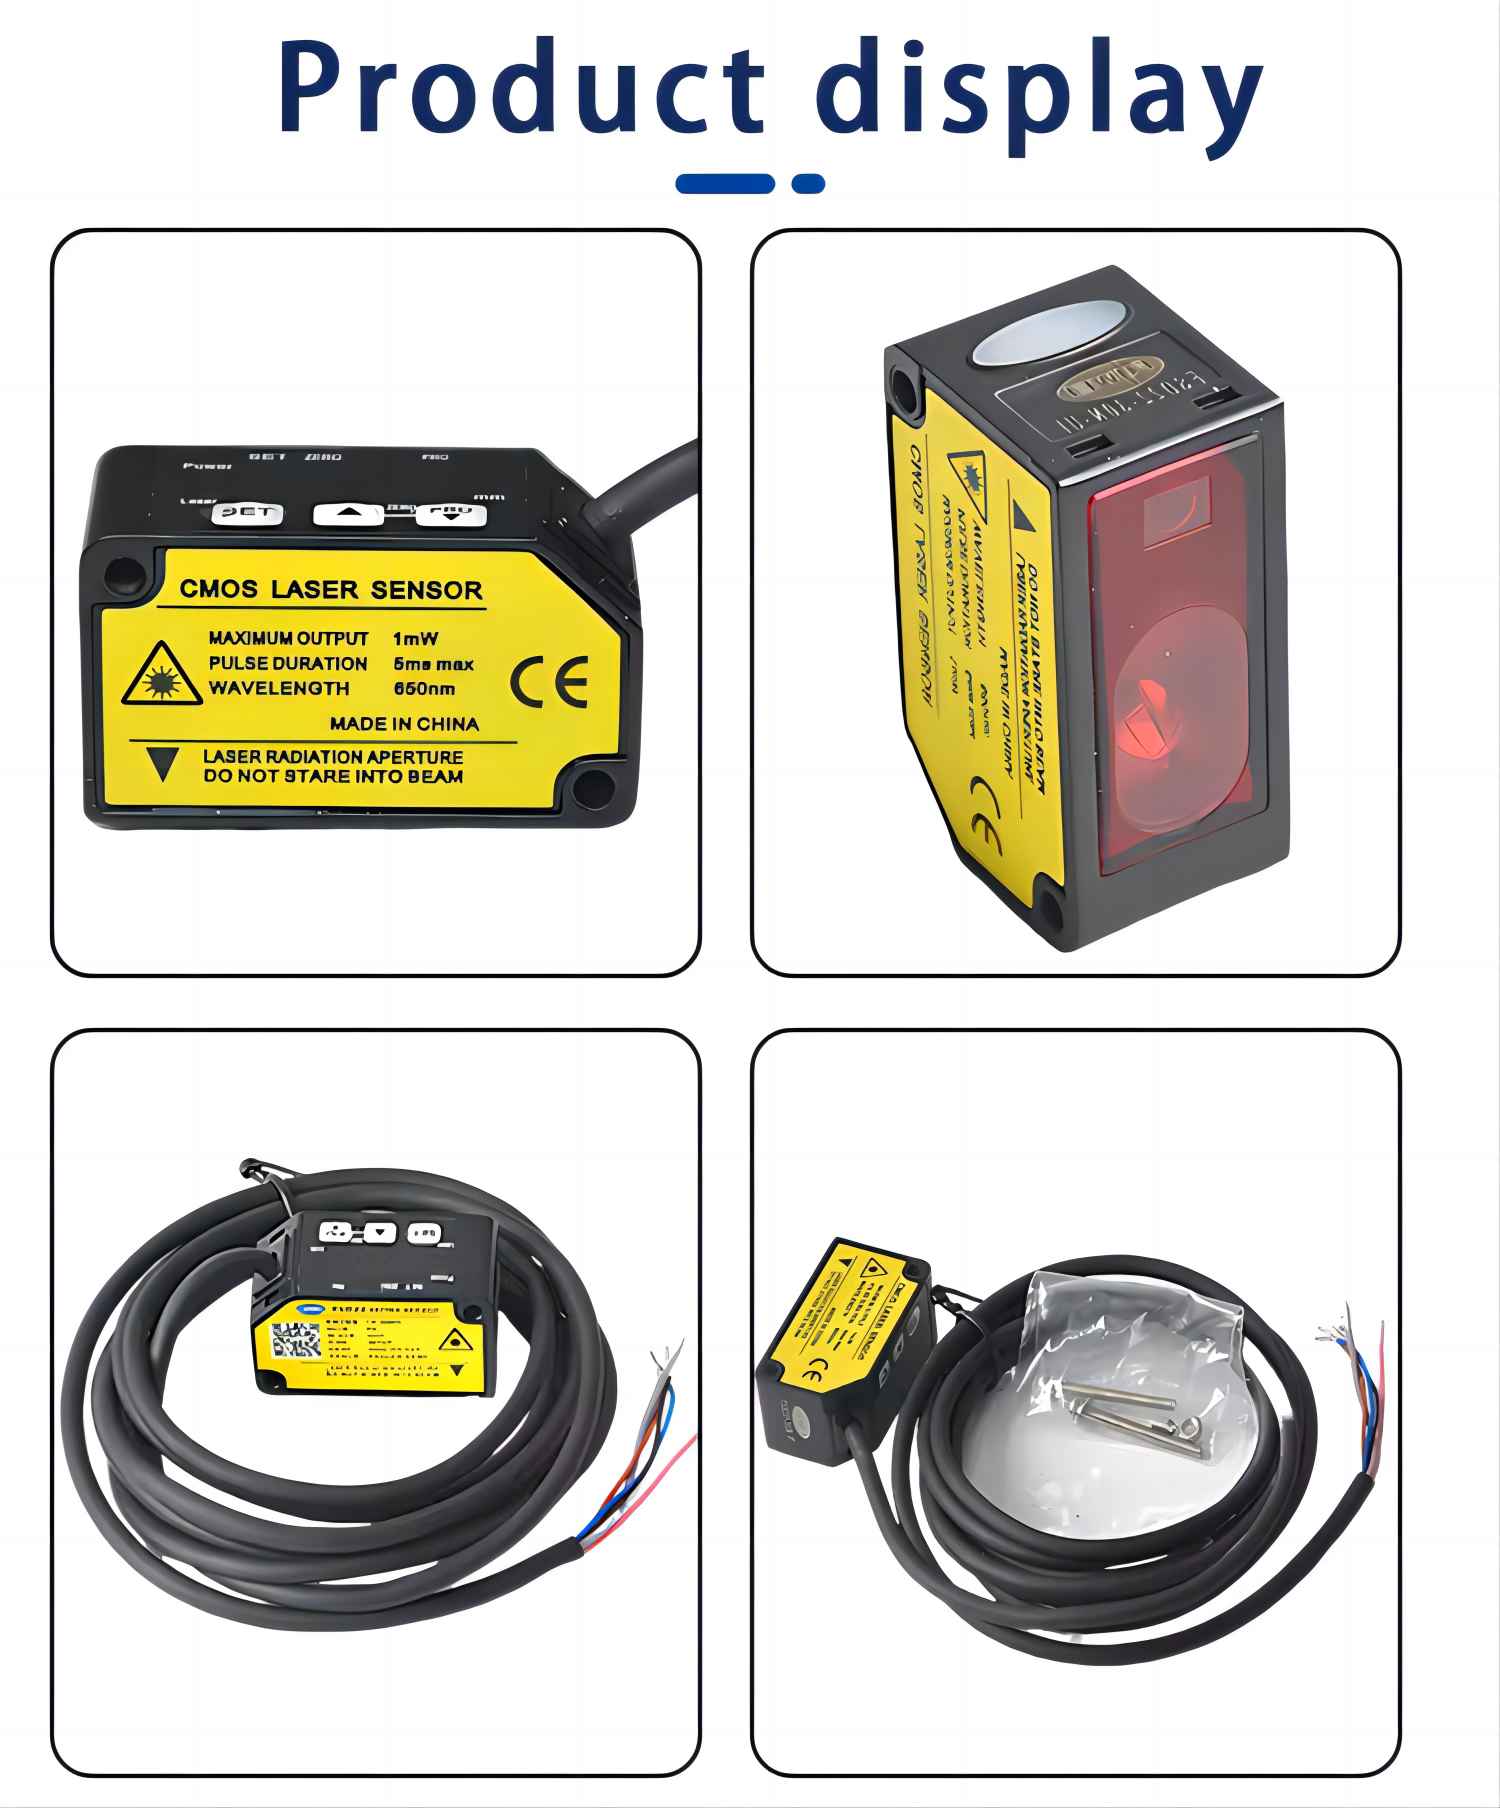 Laser displacement sensor Product display